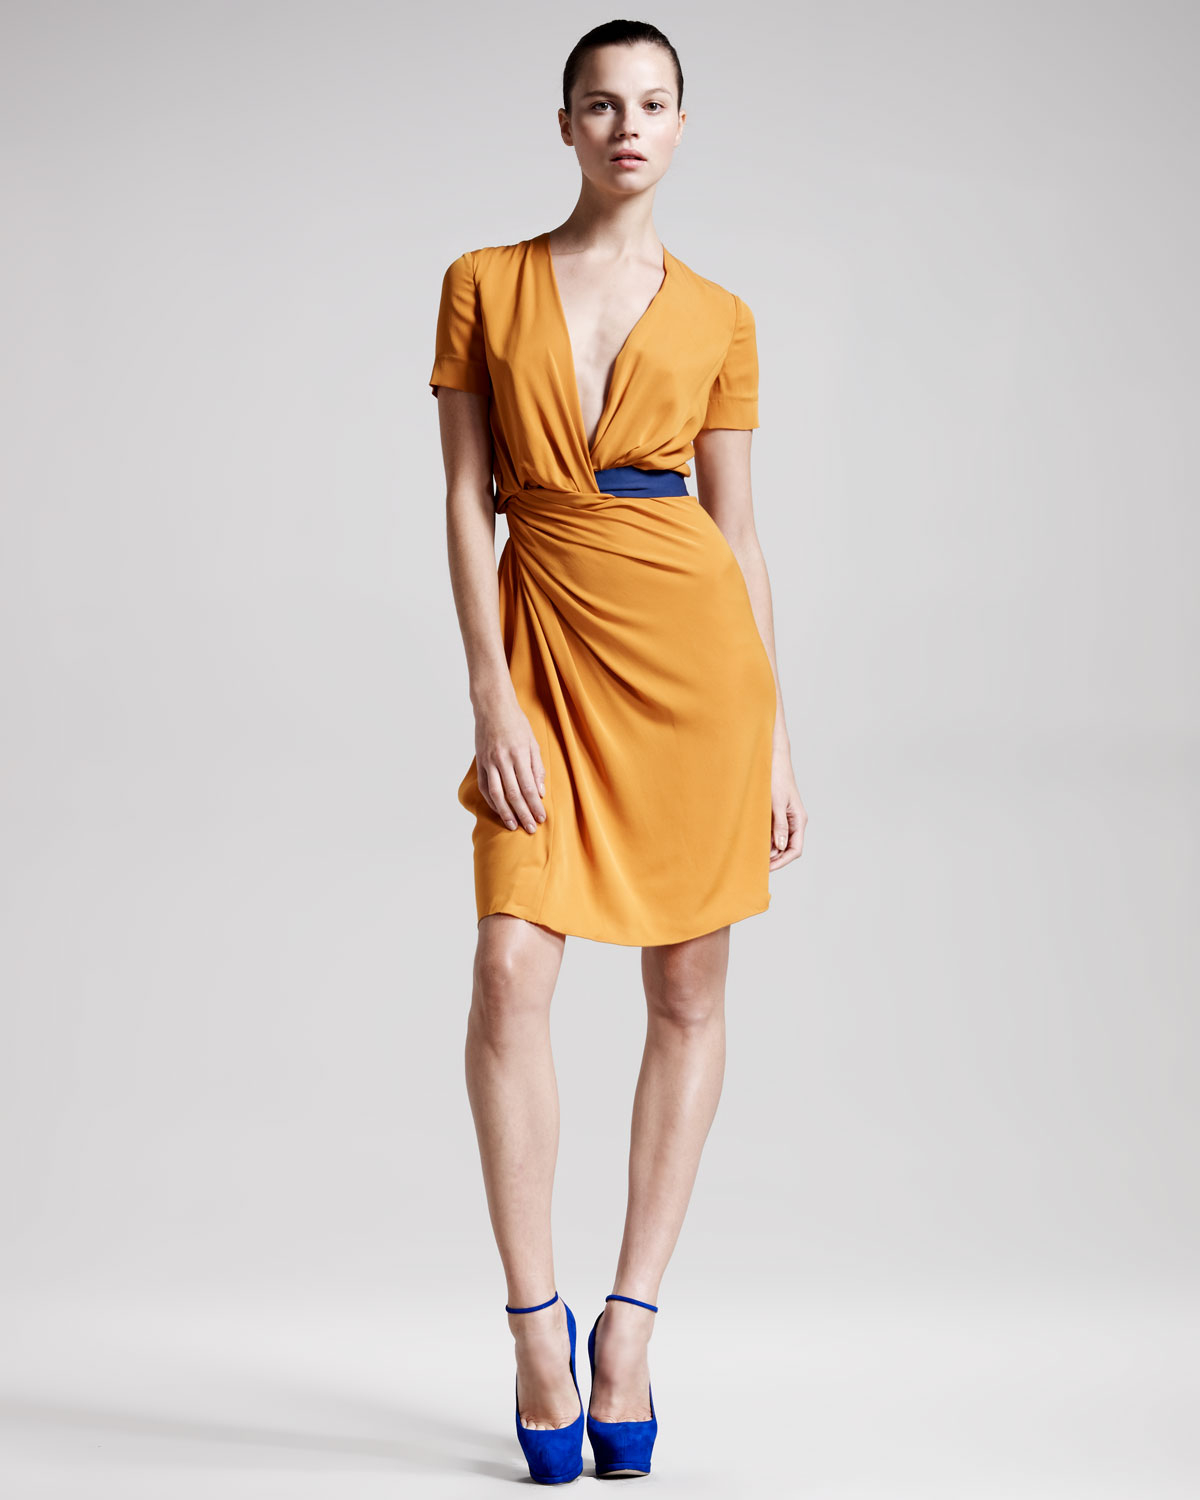 Orange contrast dresses